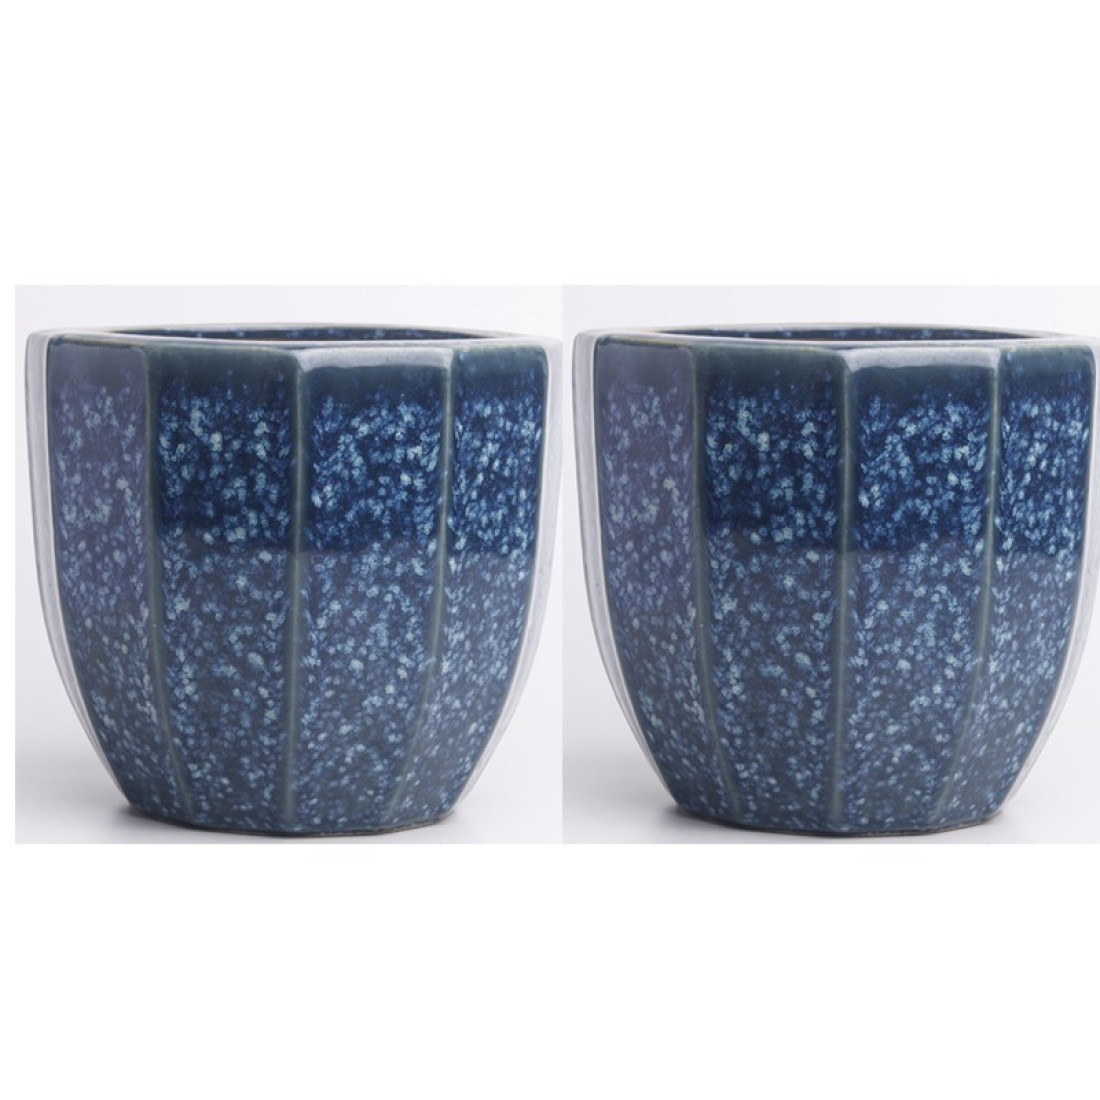 Round Blue Stoneware glazed Ceramic Pots(Size: 7